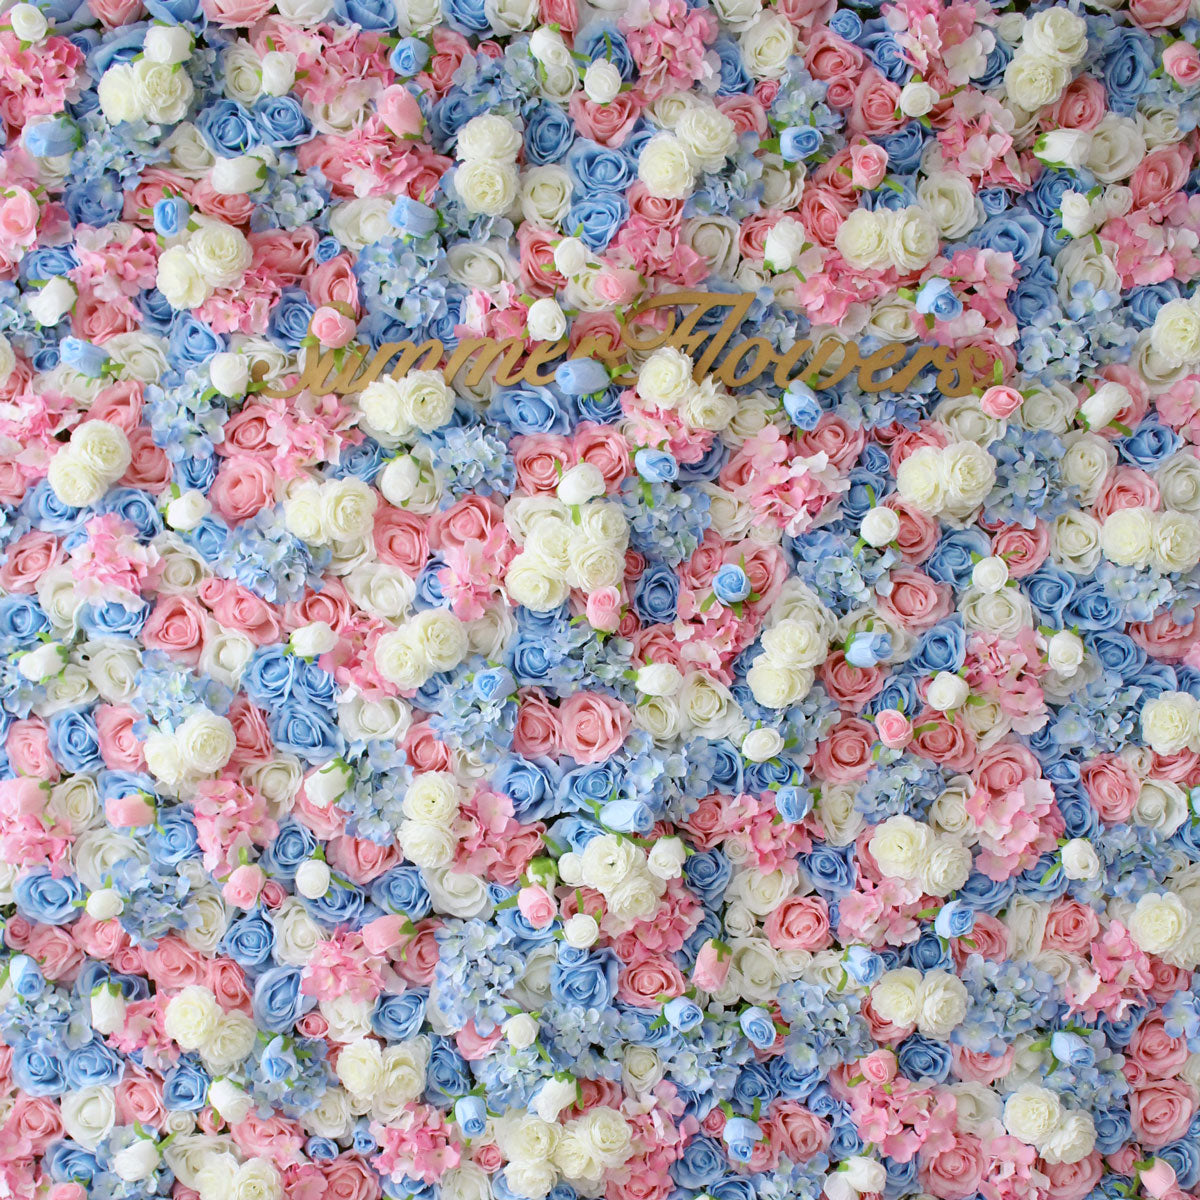 Summer Flower:CB-180 8ft*8ft Cloth Back Artificial Flower Wall Backdrop